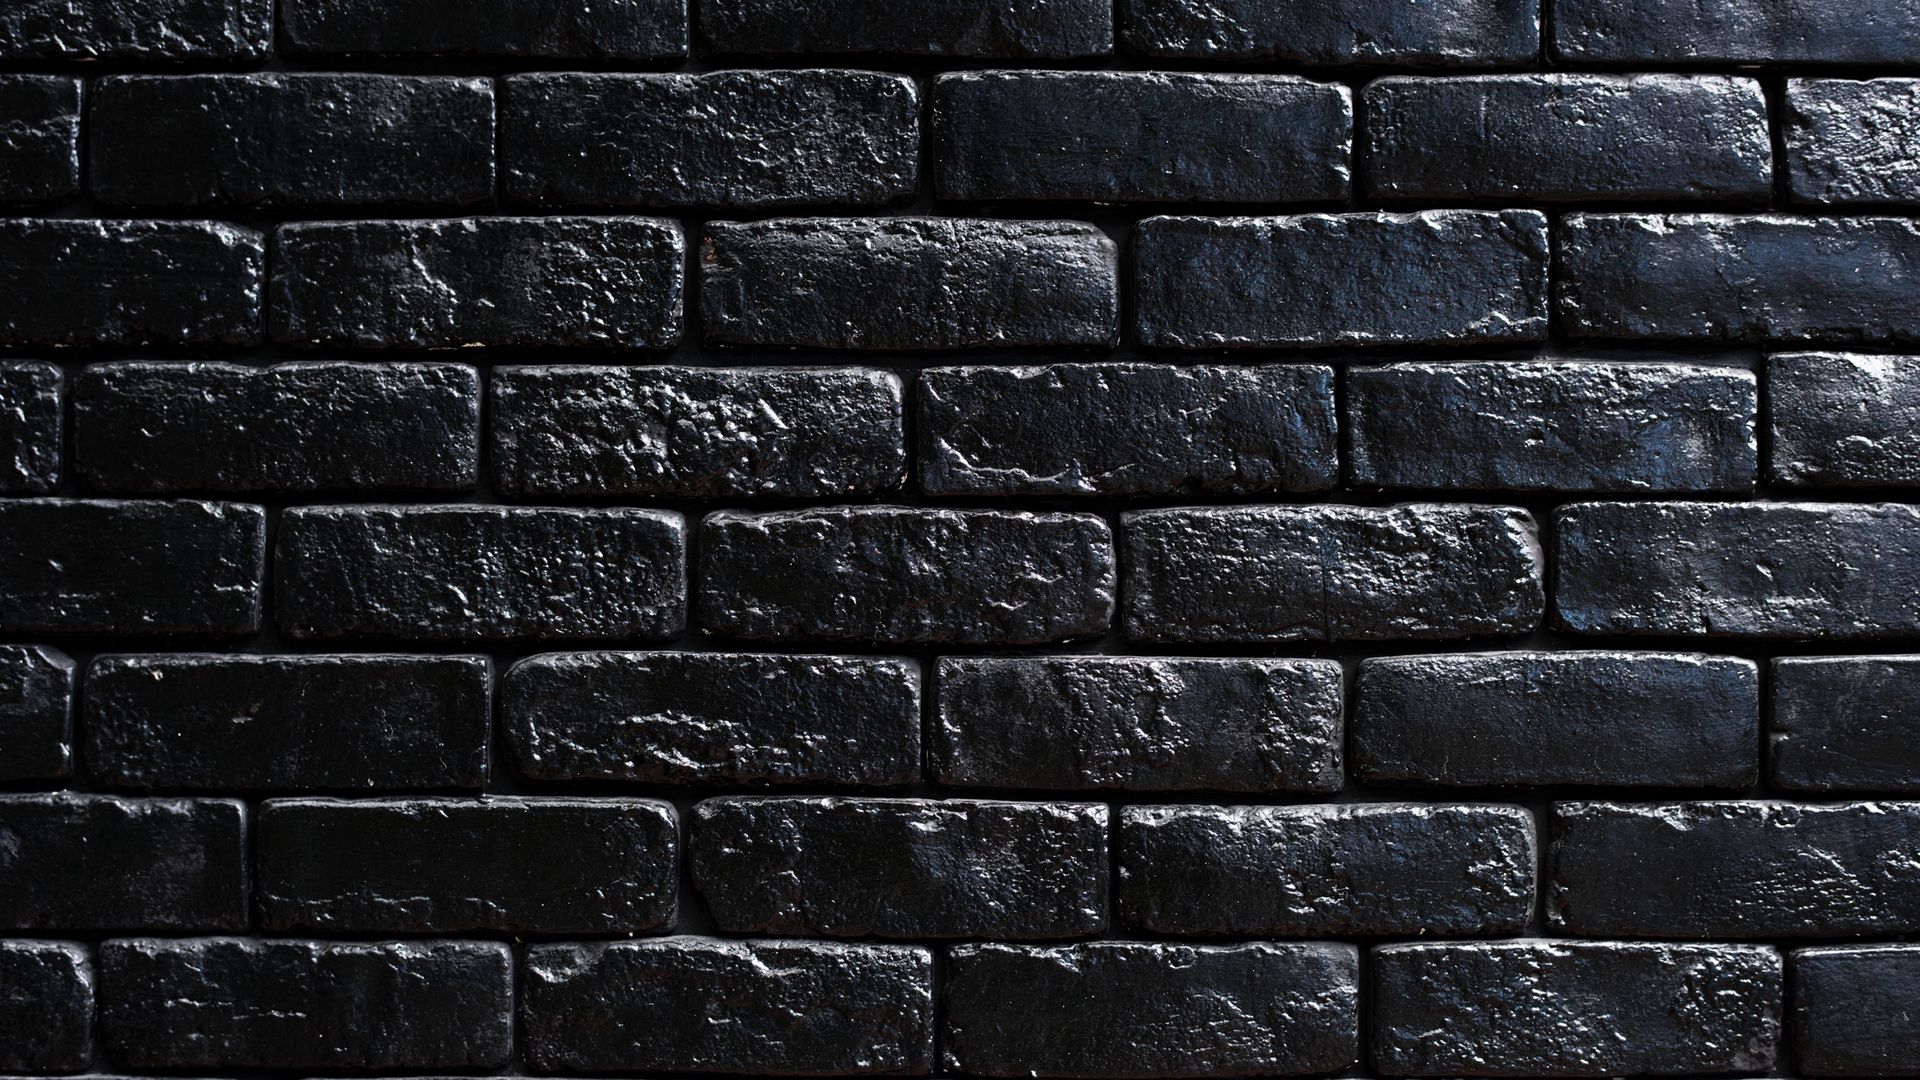 Download wallpaper 1920x1080 wall, bricks, black, paint full hd, hdtv, fhd,  1080p hd background